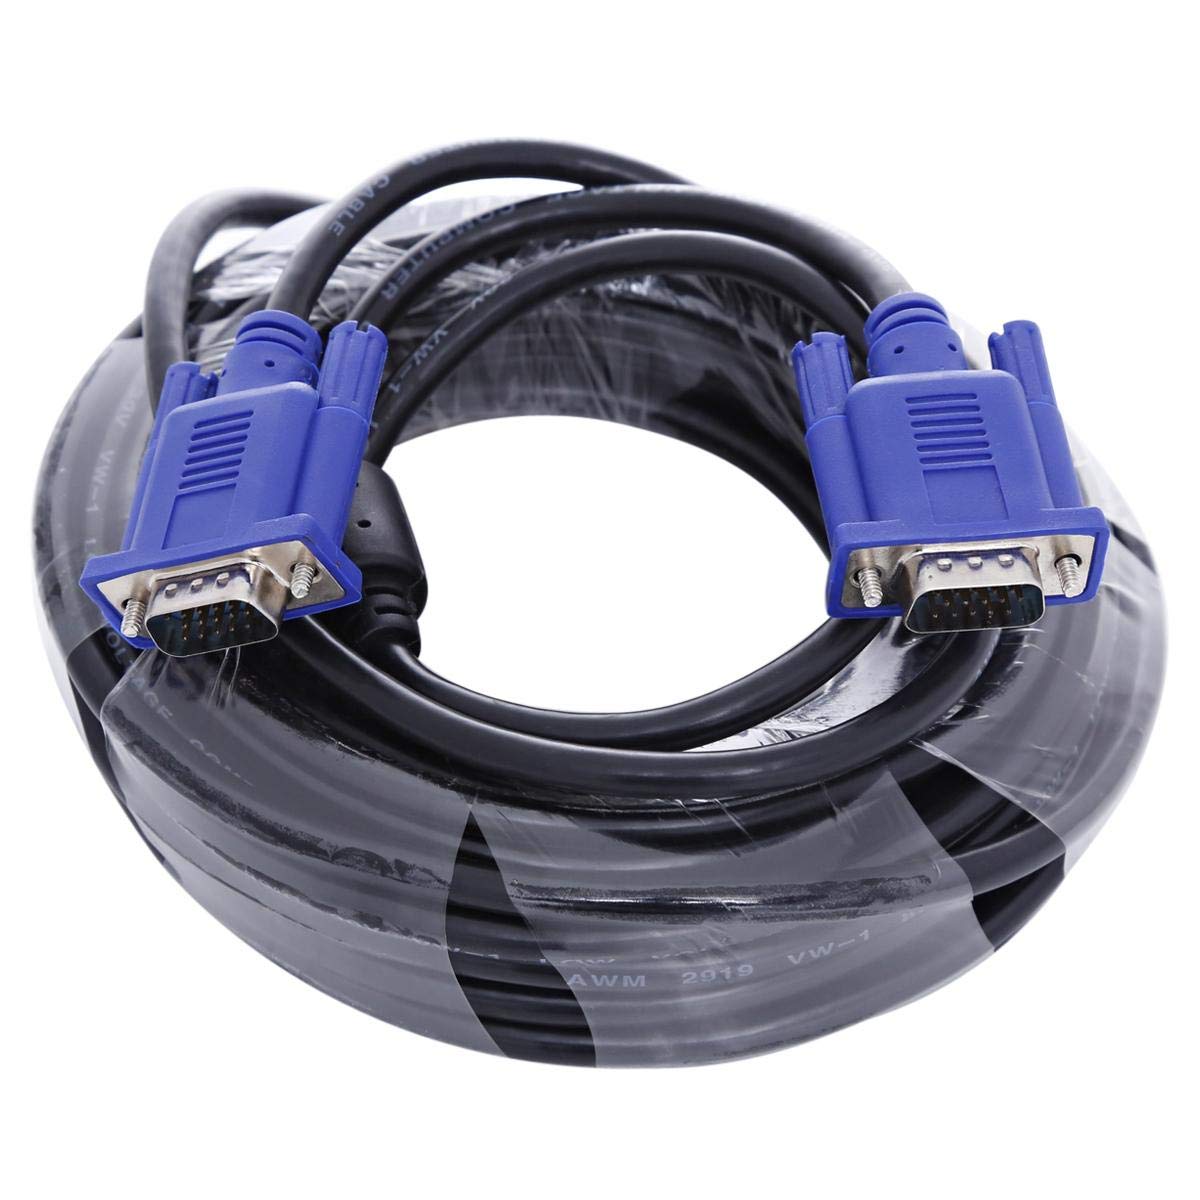 VGA Cable 10m